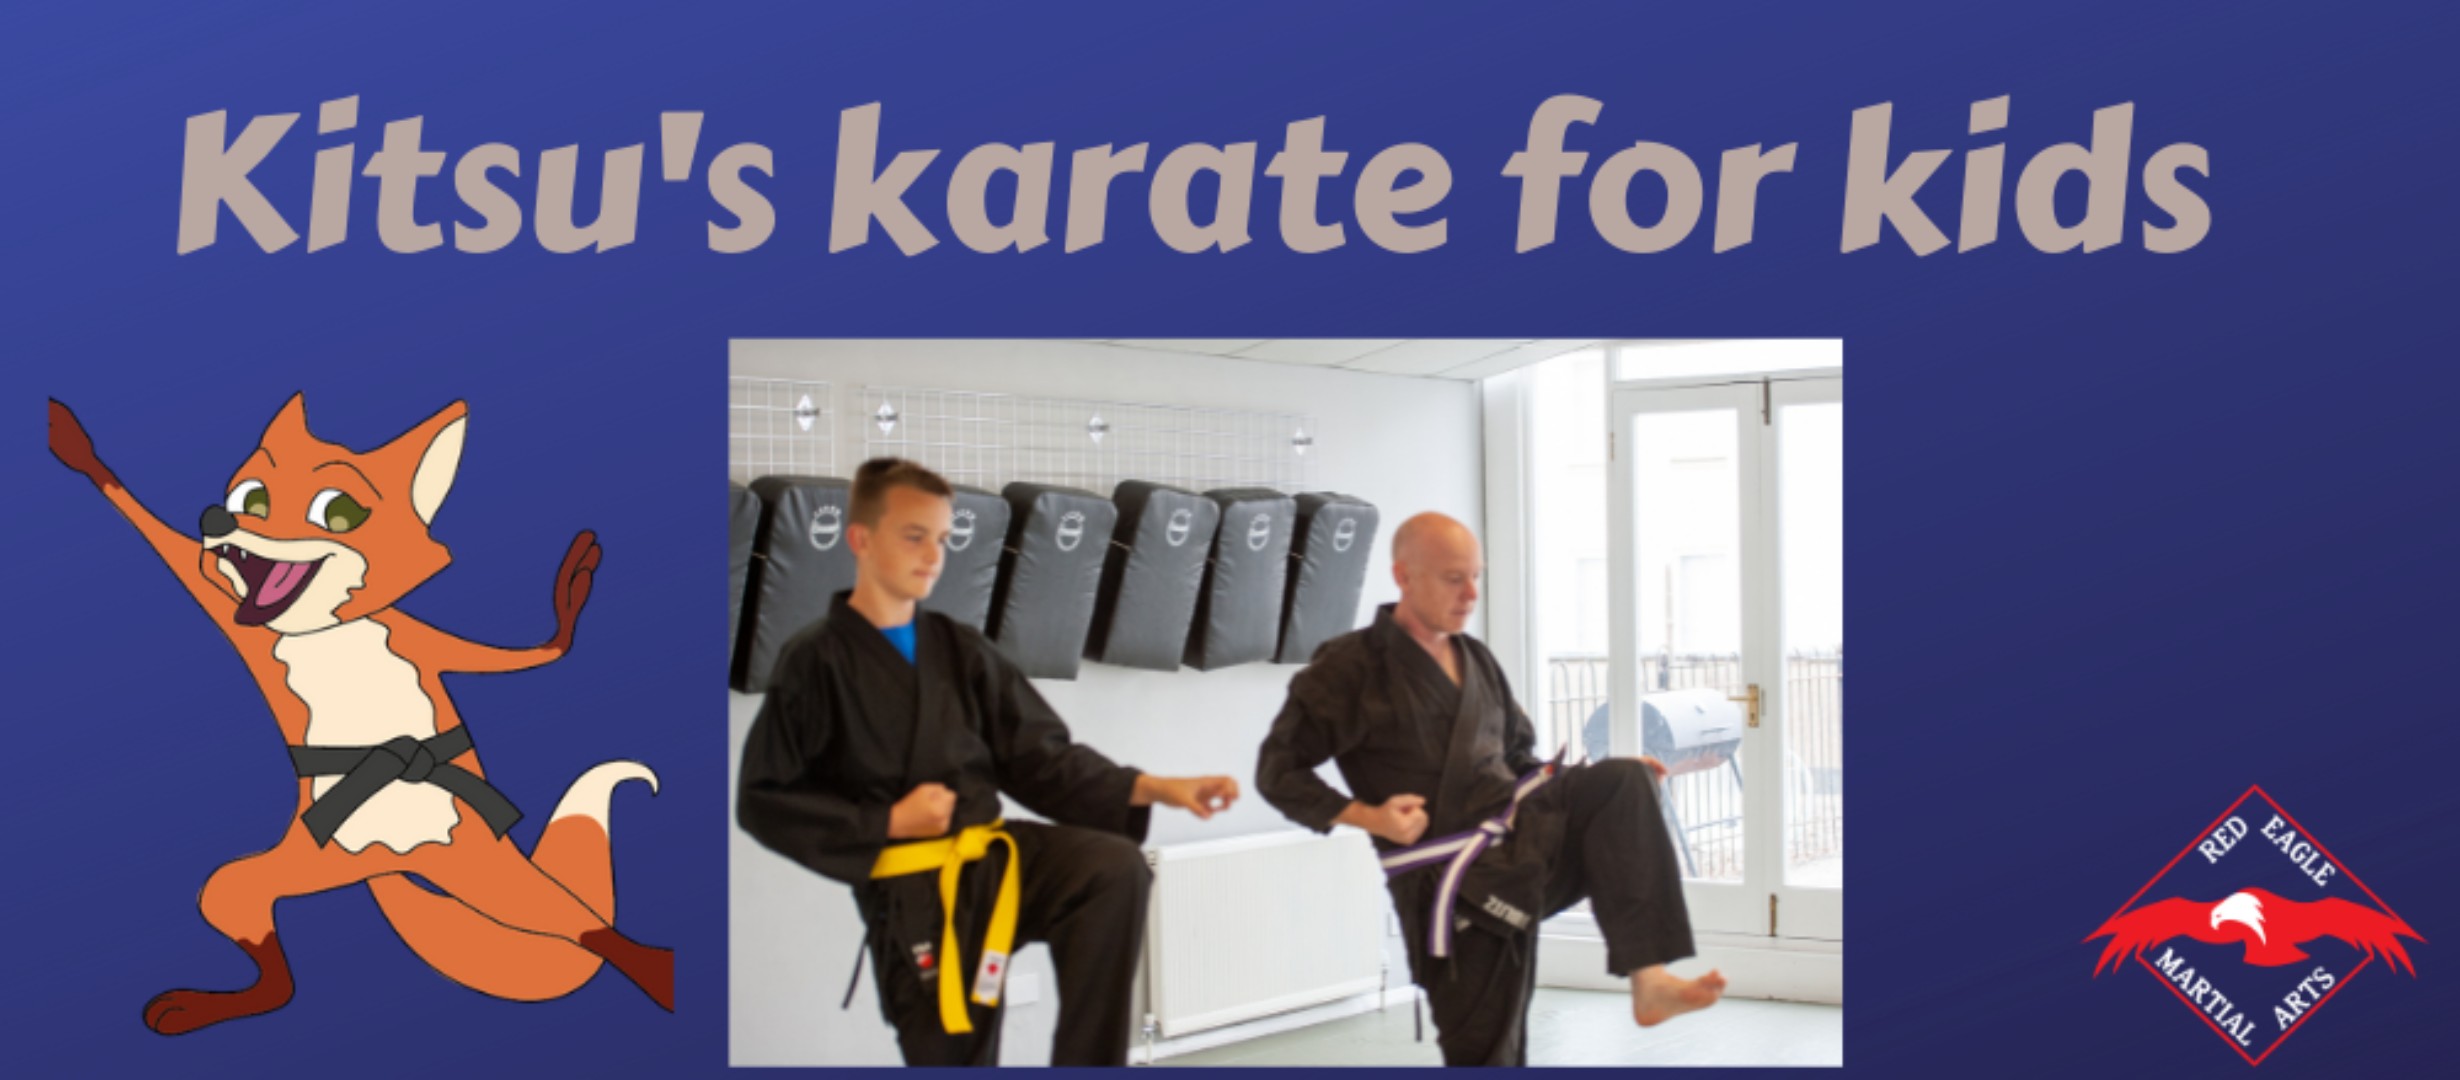 Kitsu's Karate for Kids - Junior karate student training